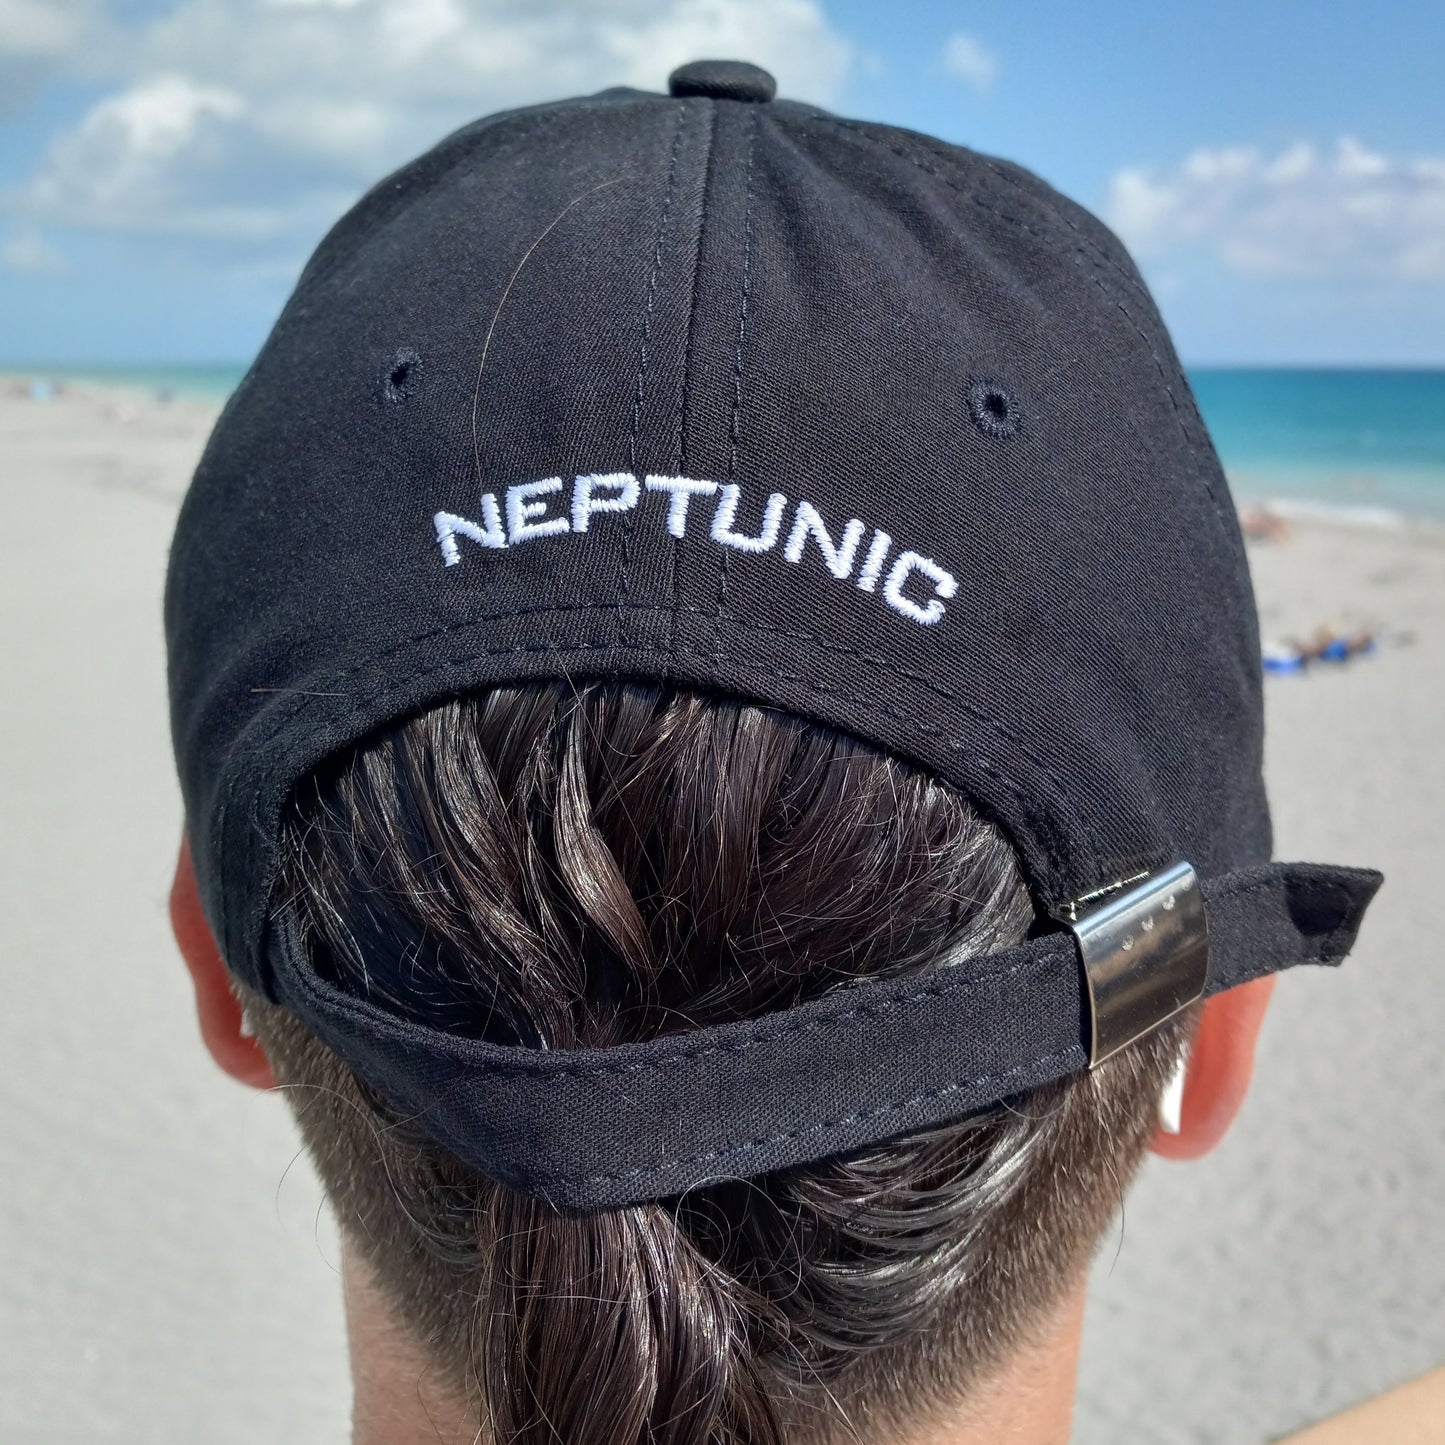 Neptunic Buckle Cap in Black